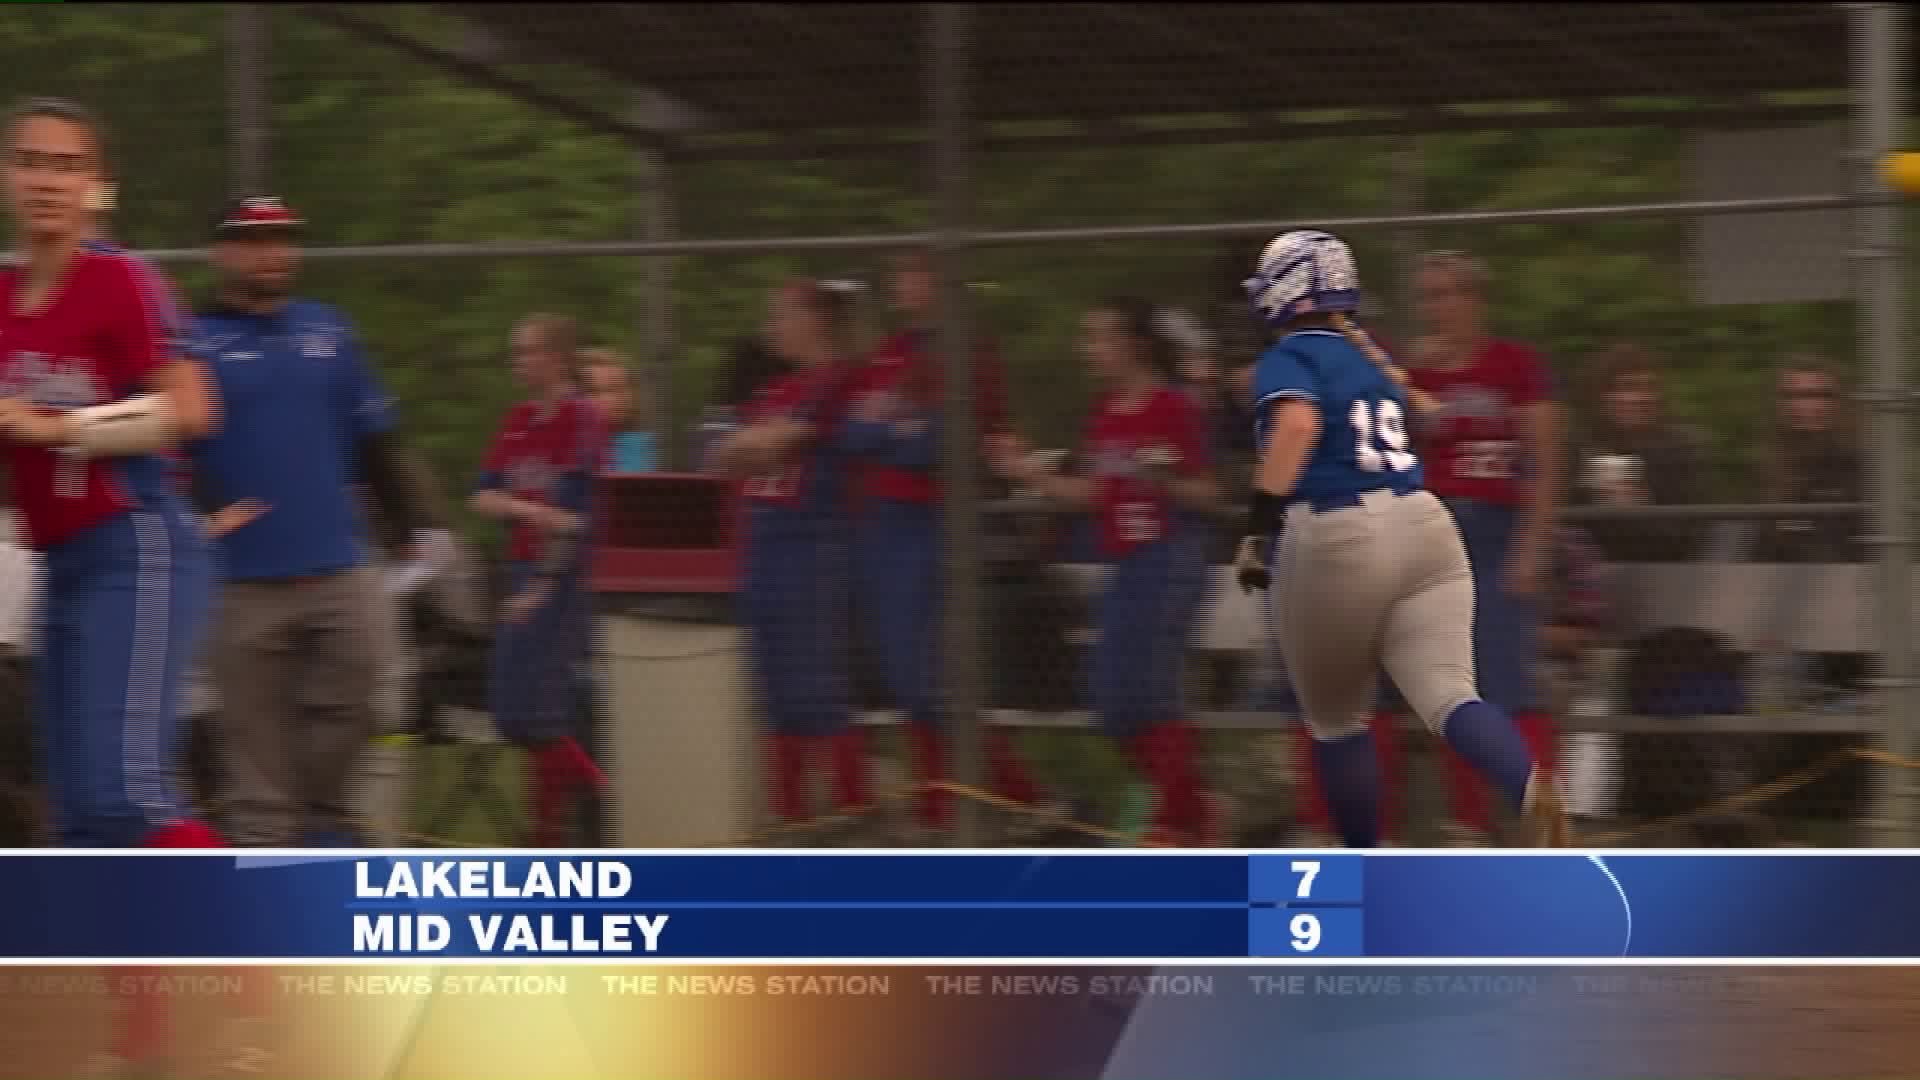 Lakeland vs Mid Valley softball